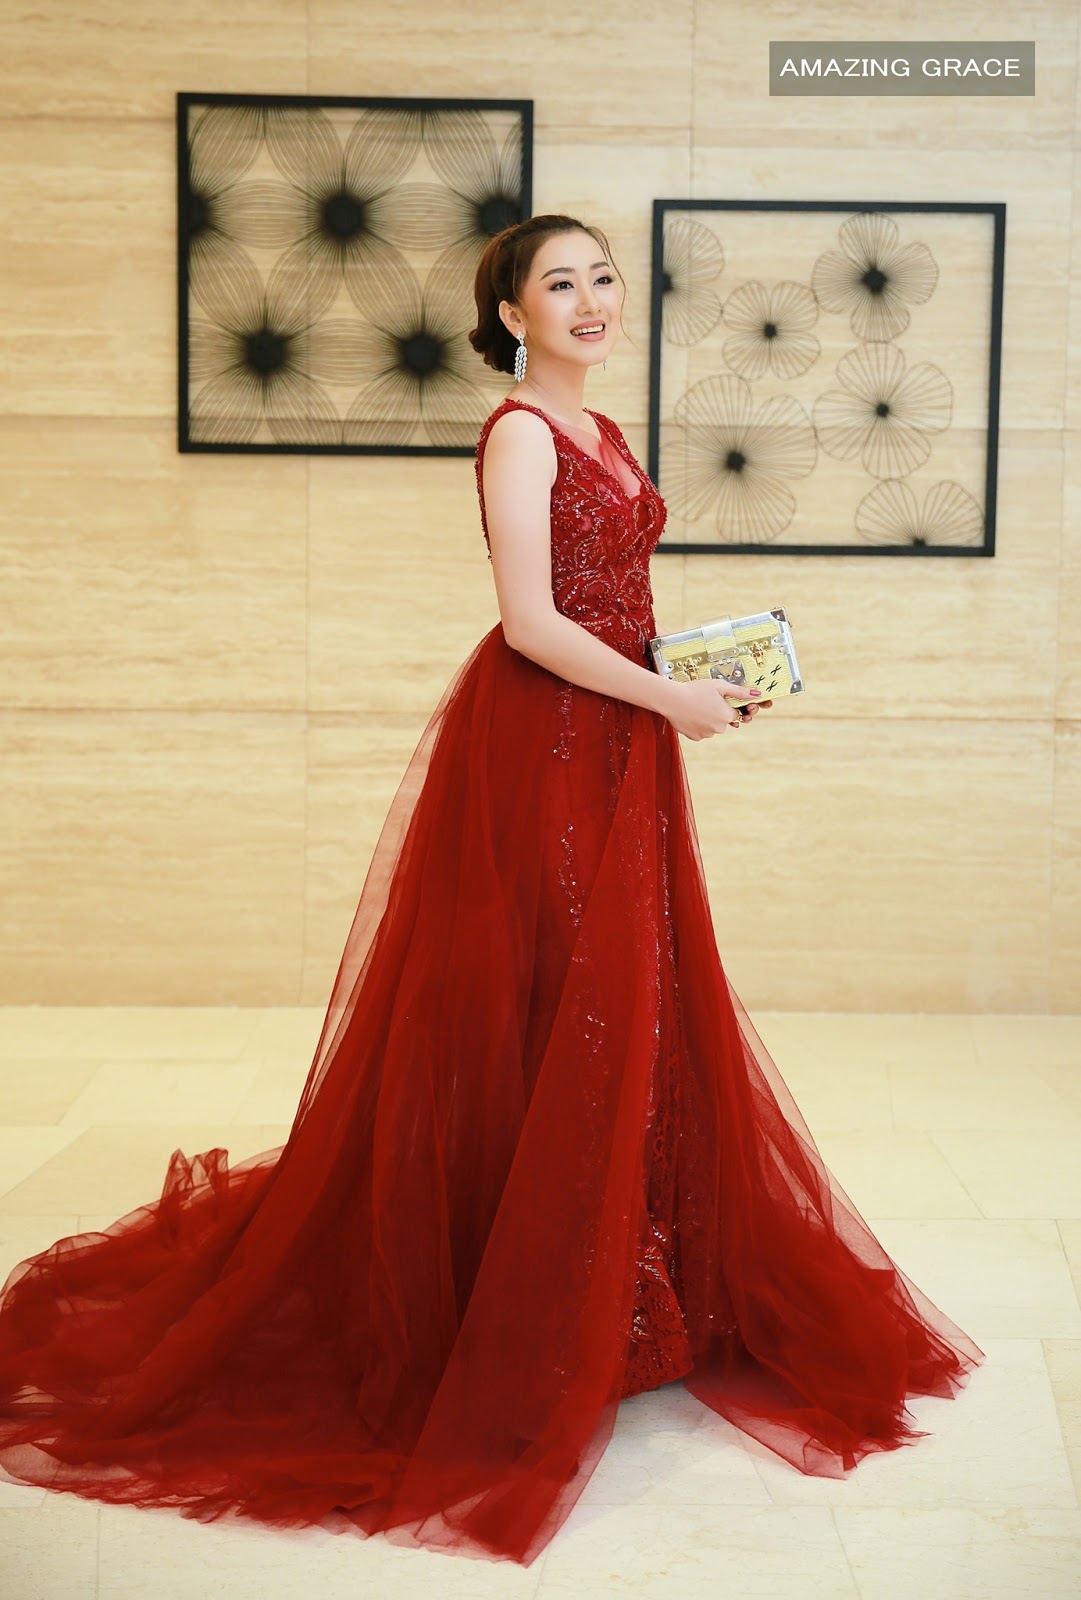 Yu Thandar Tin In Beautiful Red Gown Fashion 